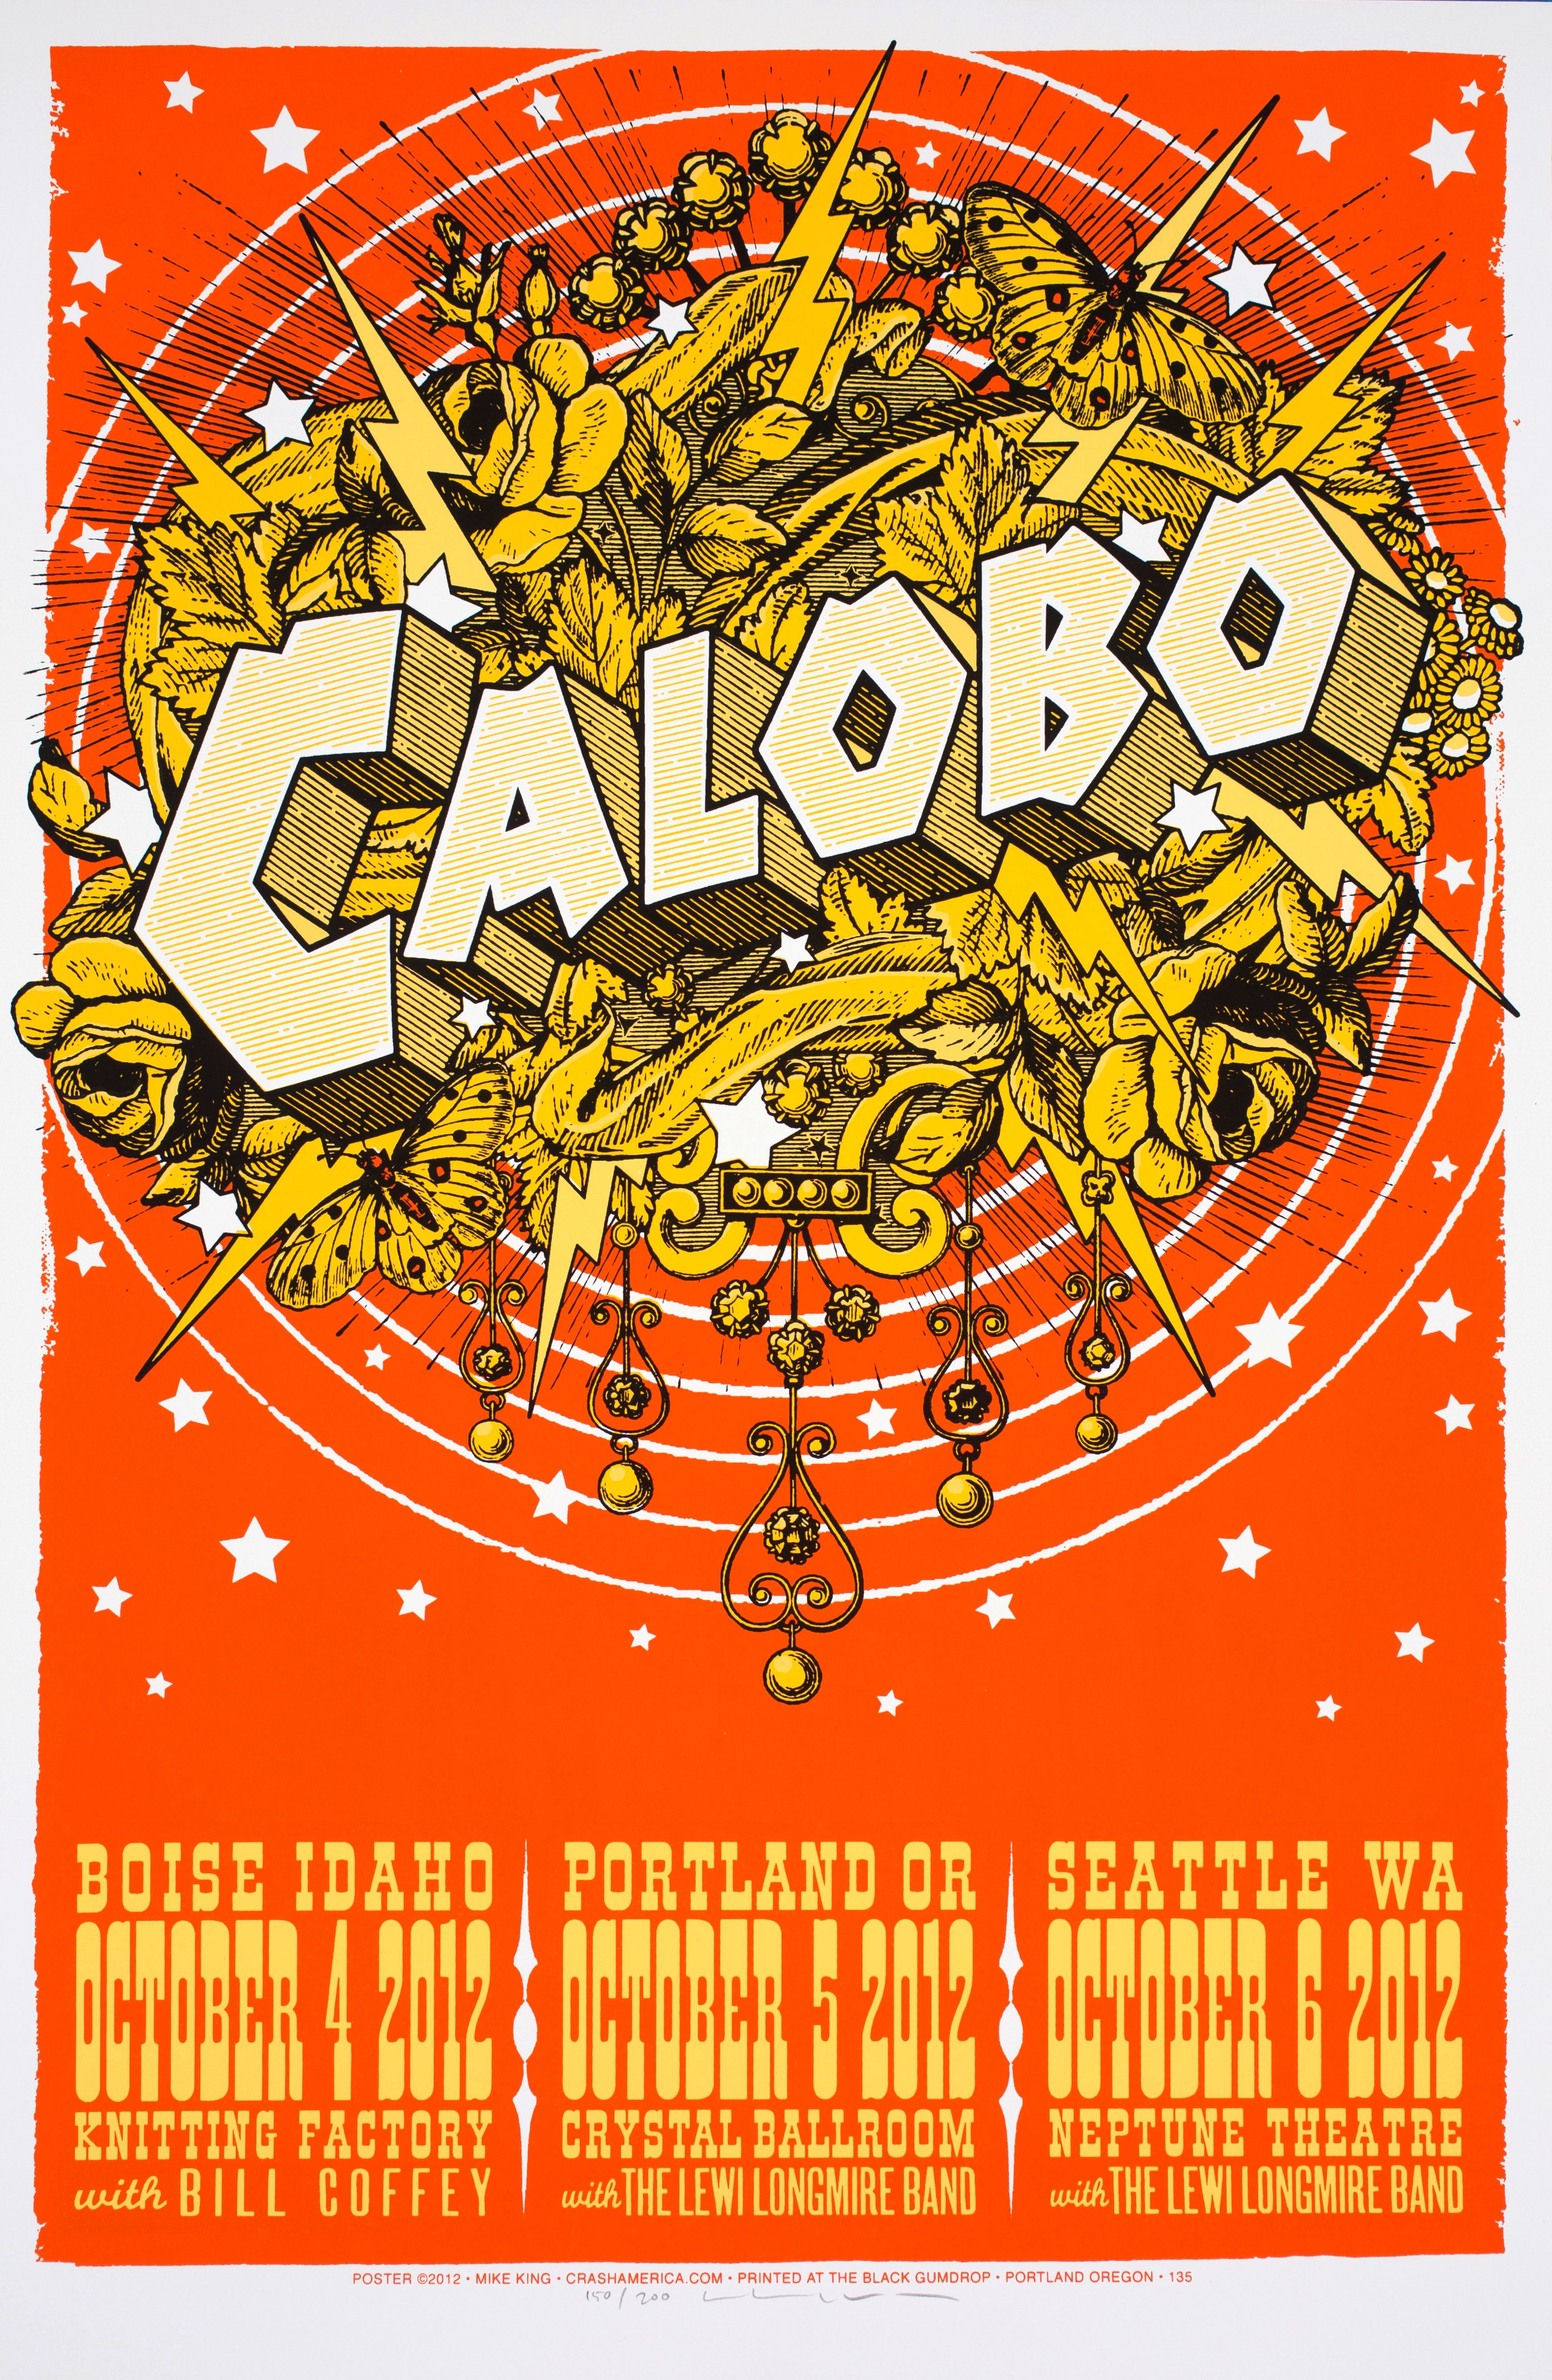 MXP-196.1 Calobo 2003 Tour  Nov 4 Concert Poster